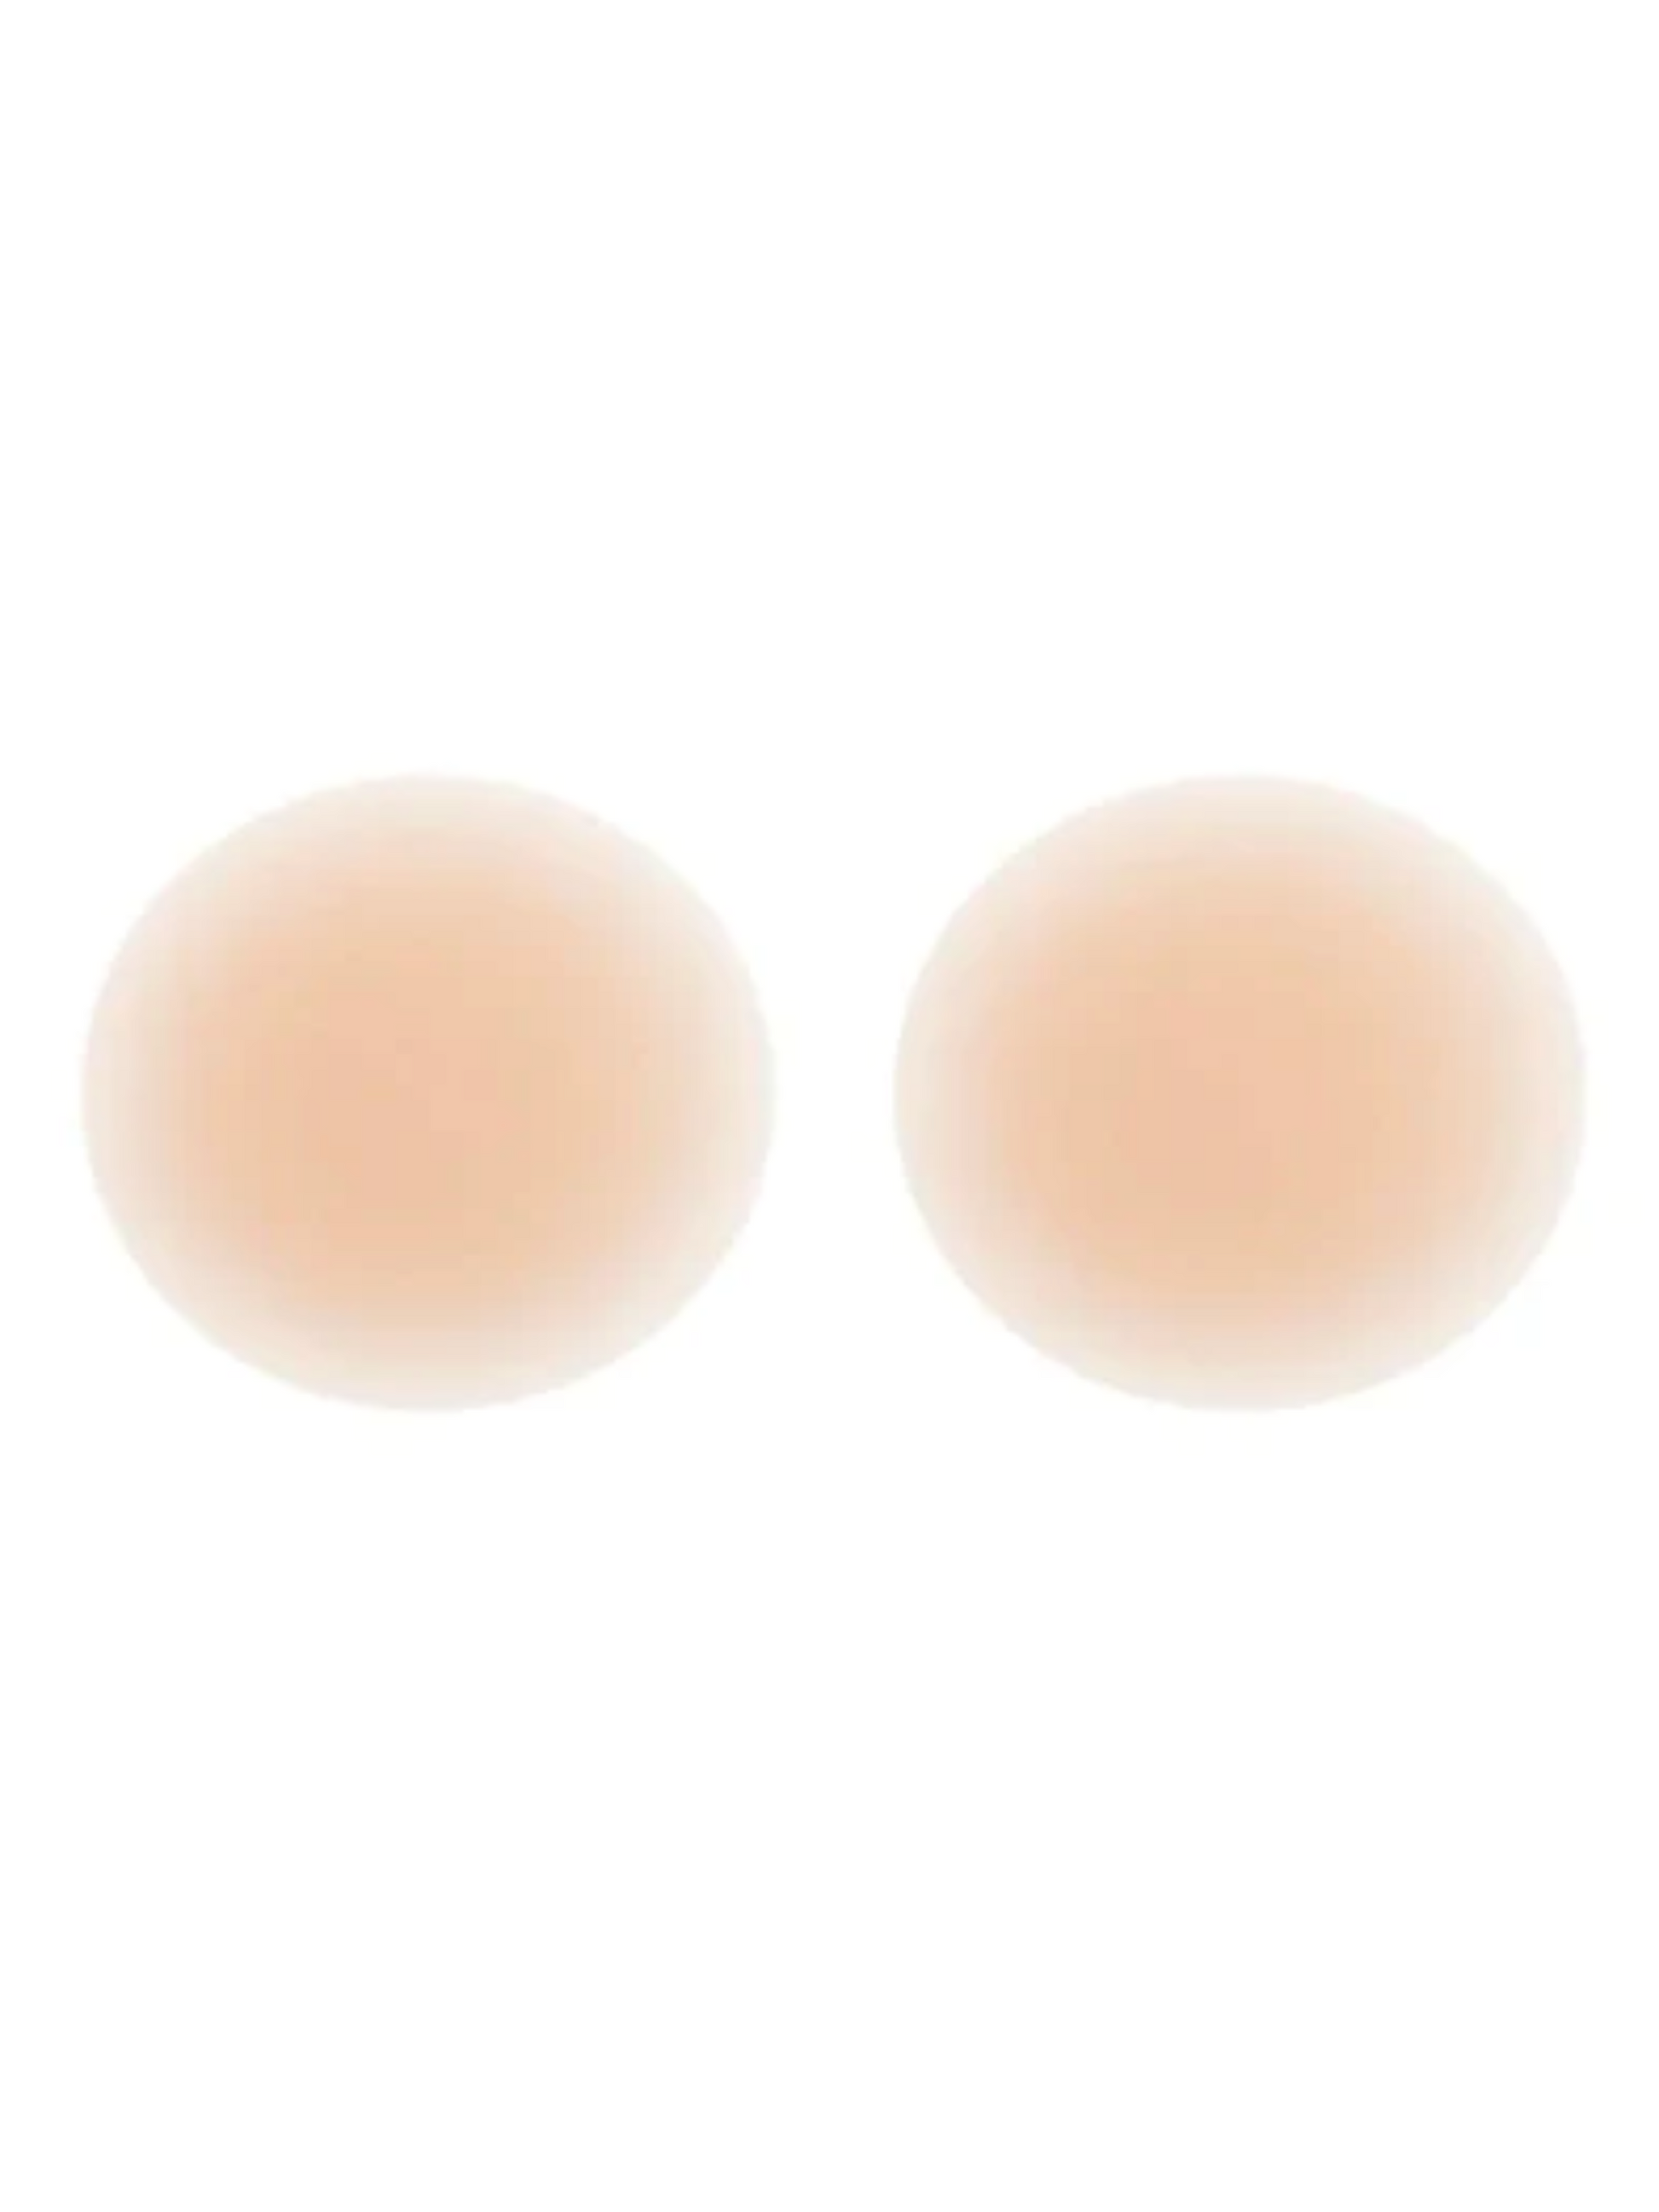 Boomba Magic Nipple Covers Adhesive Caramel